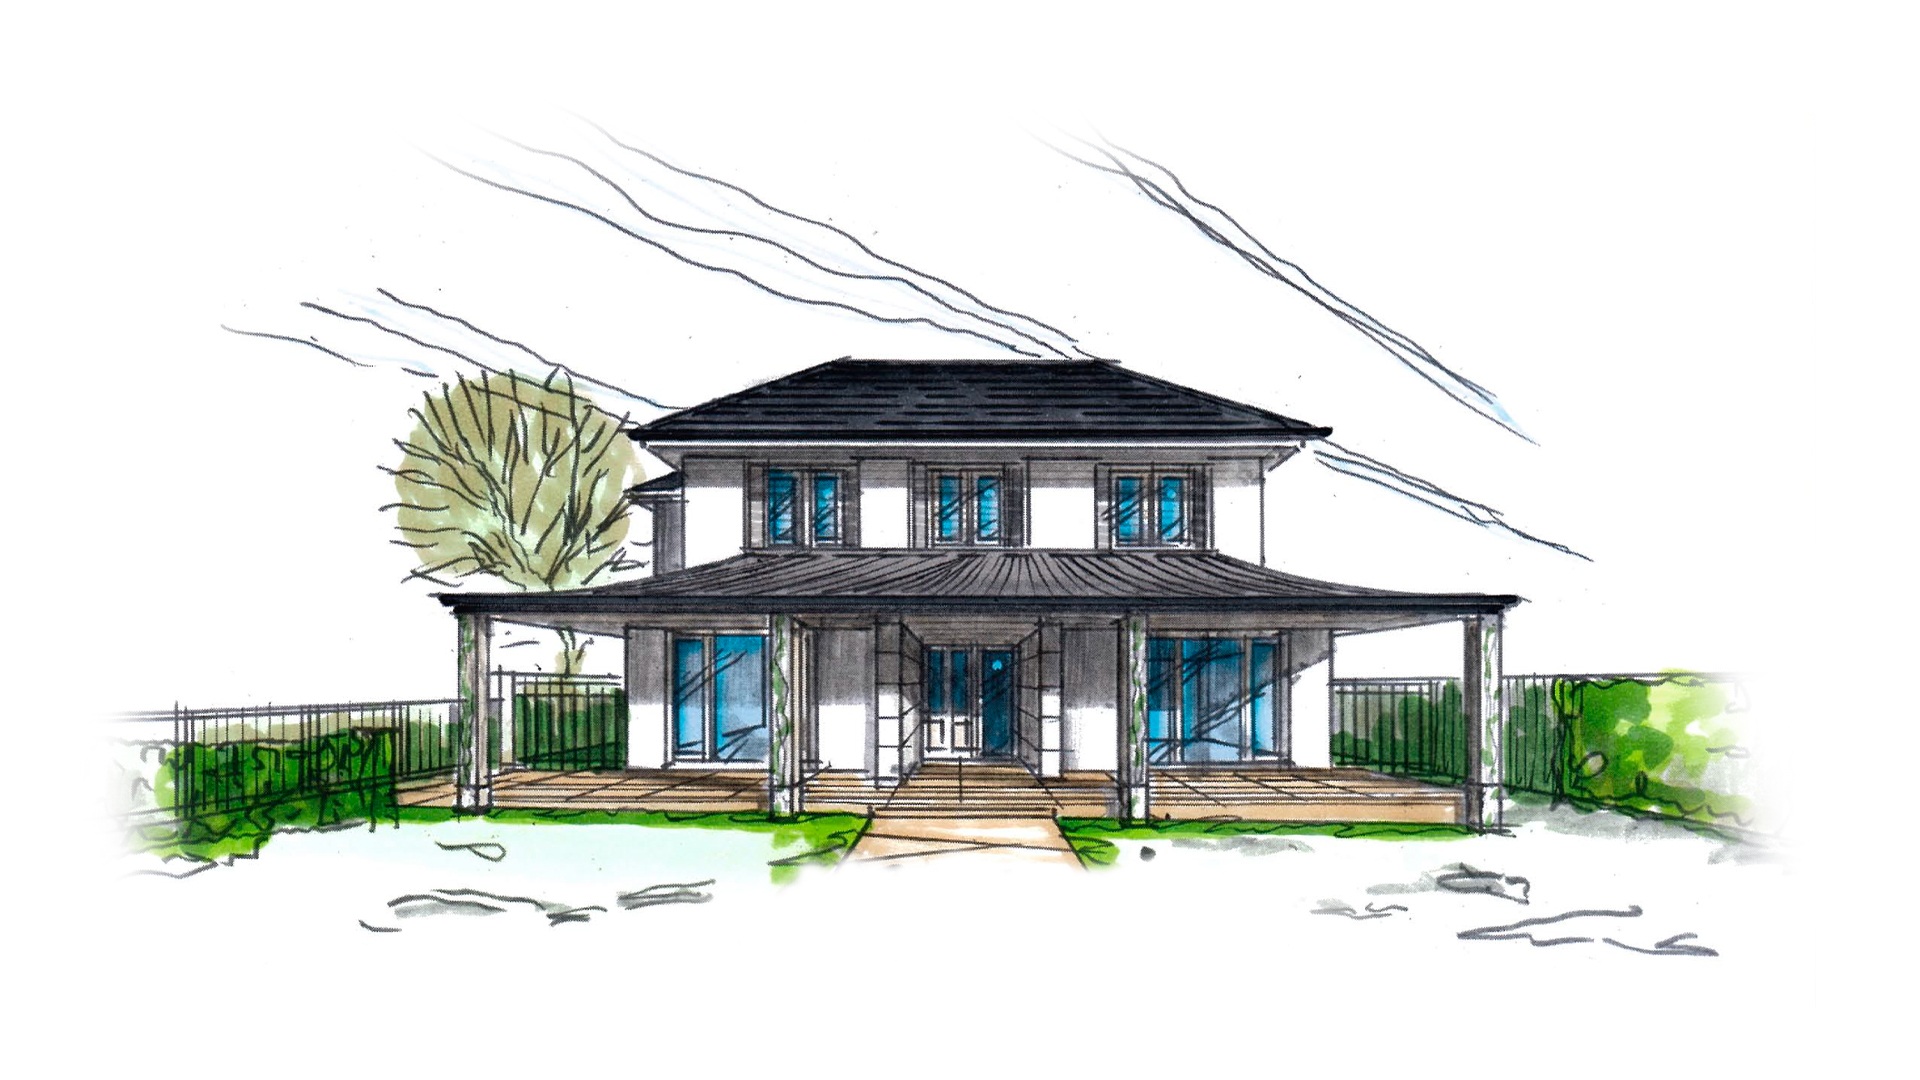 An architectural sketch of the Englehart Glen Iris residence.